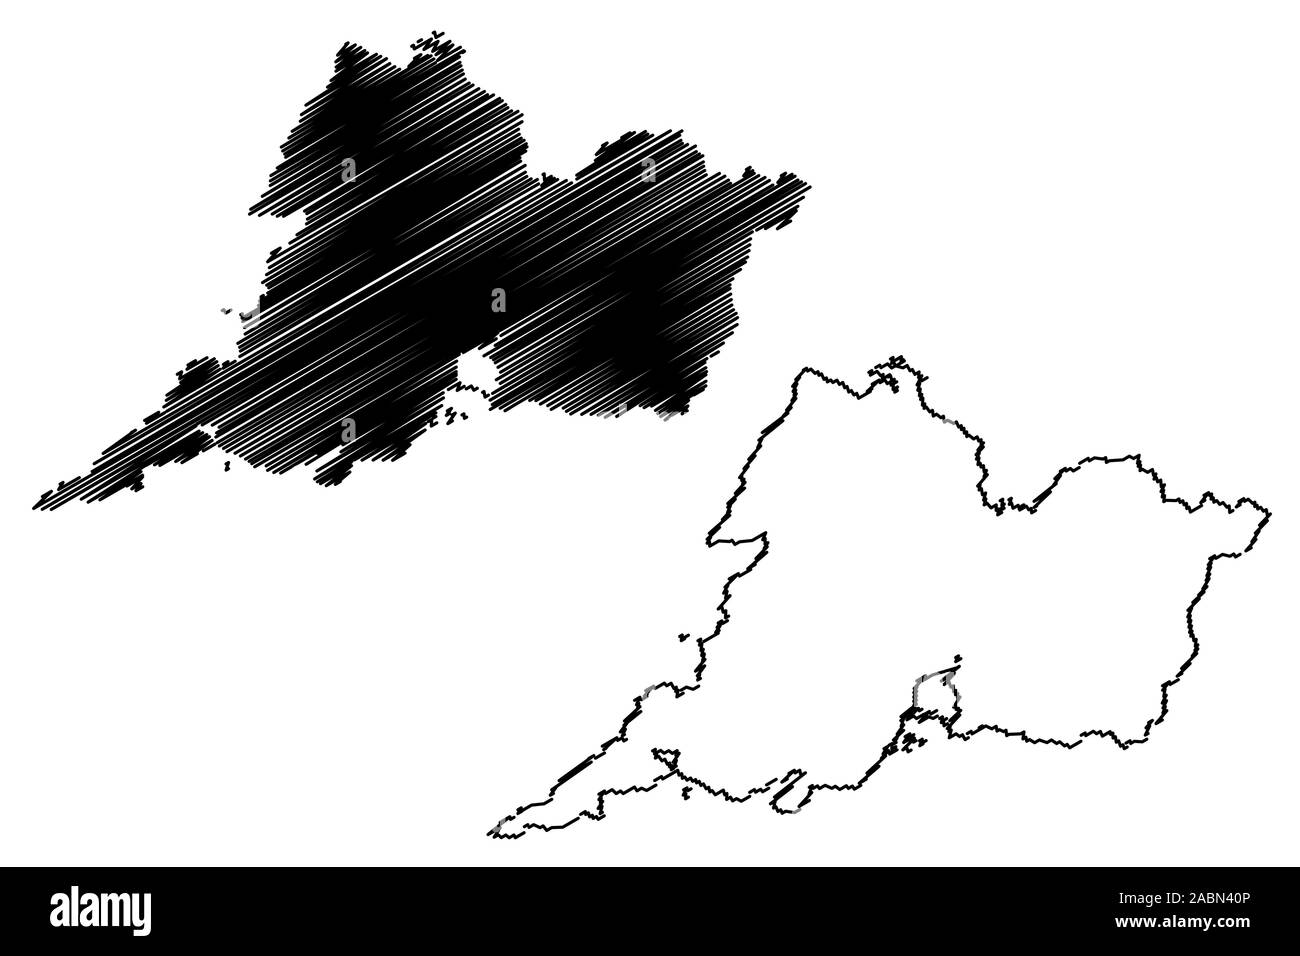 Clare County Council (Irland, Grafschaften Irlands) Karte Vektor-illustration, kritzeln Skizze Clare Karte Stock Vektor